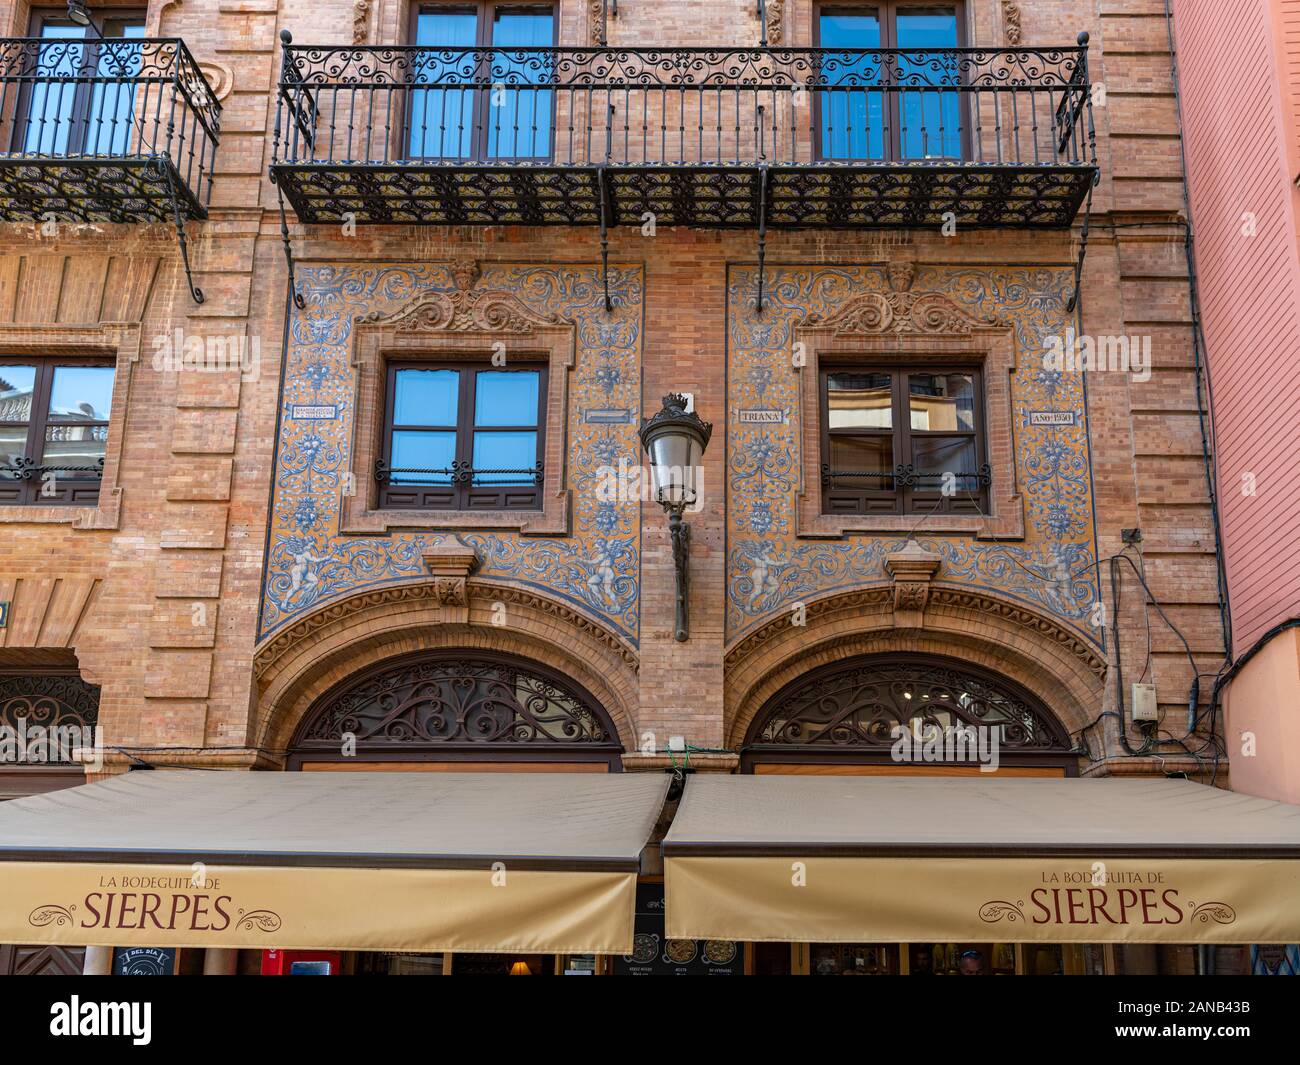 Ornate azulejos decorates the facade of La Bodeguita de Sierpes, restaurant in Calle Sierpes. Stock Photo